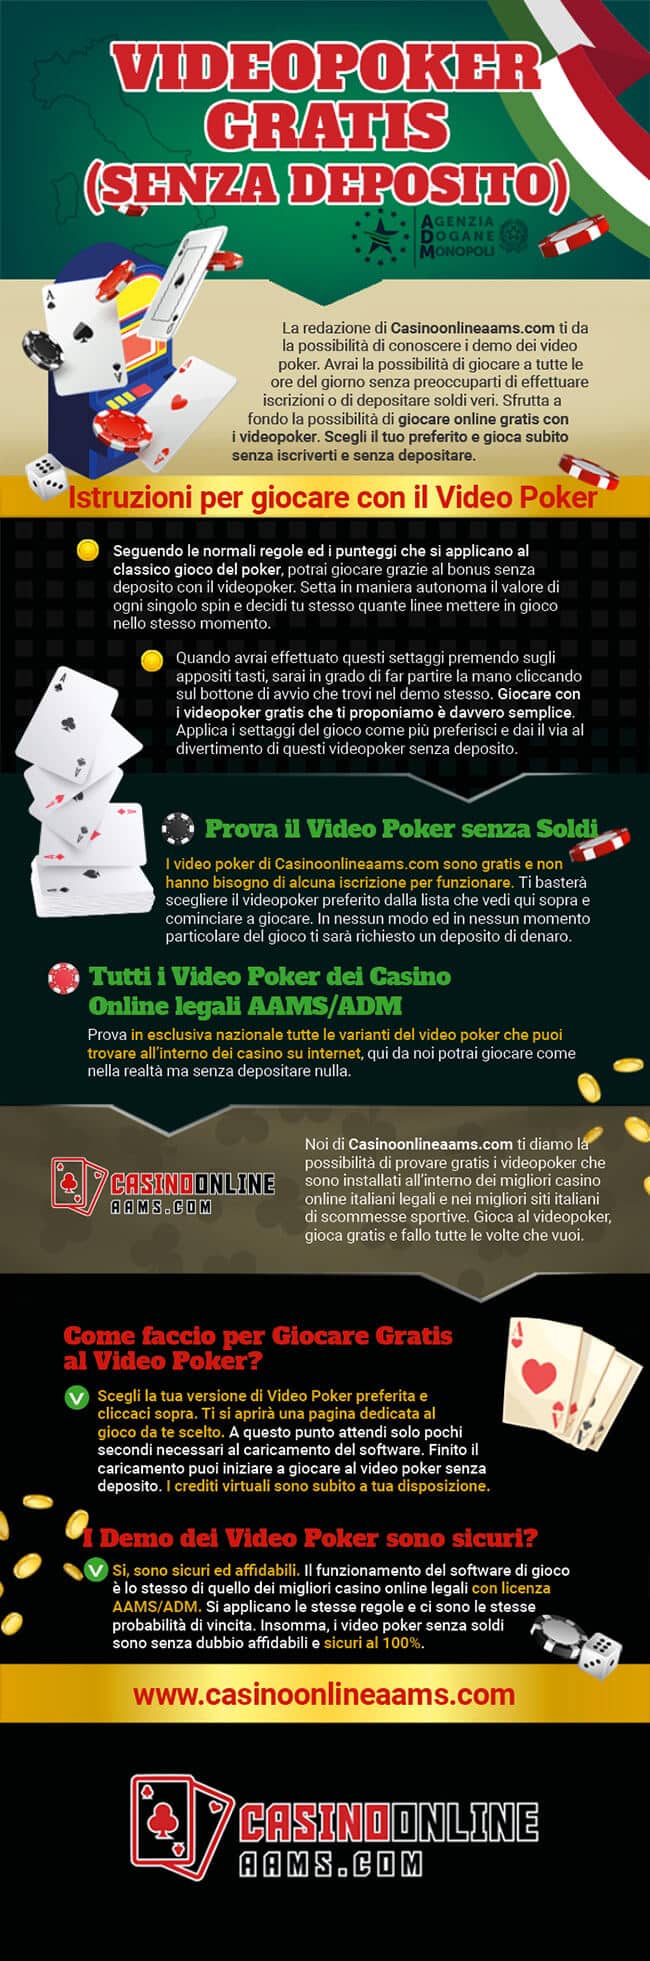 Infografica sui Video Poker Gratis senza deposito